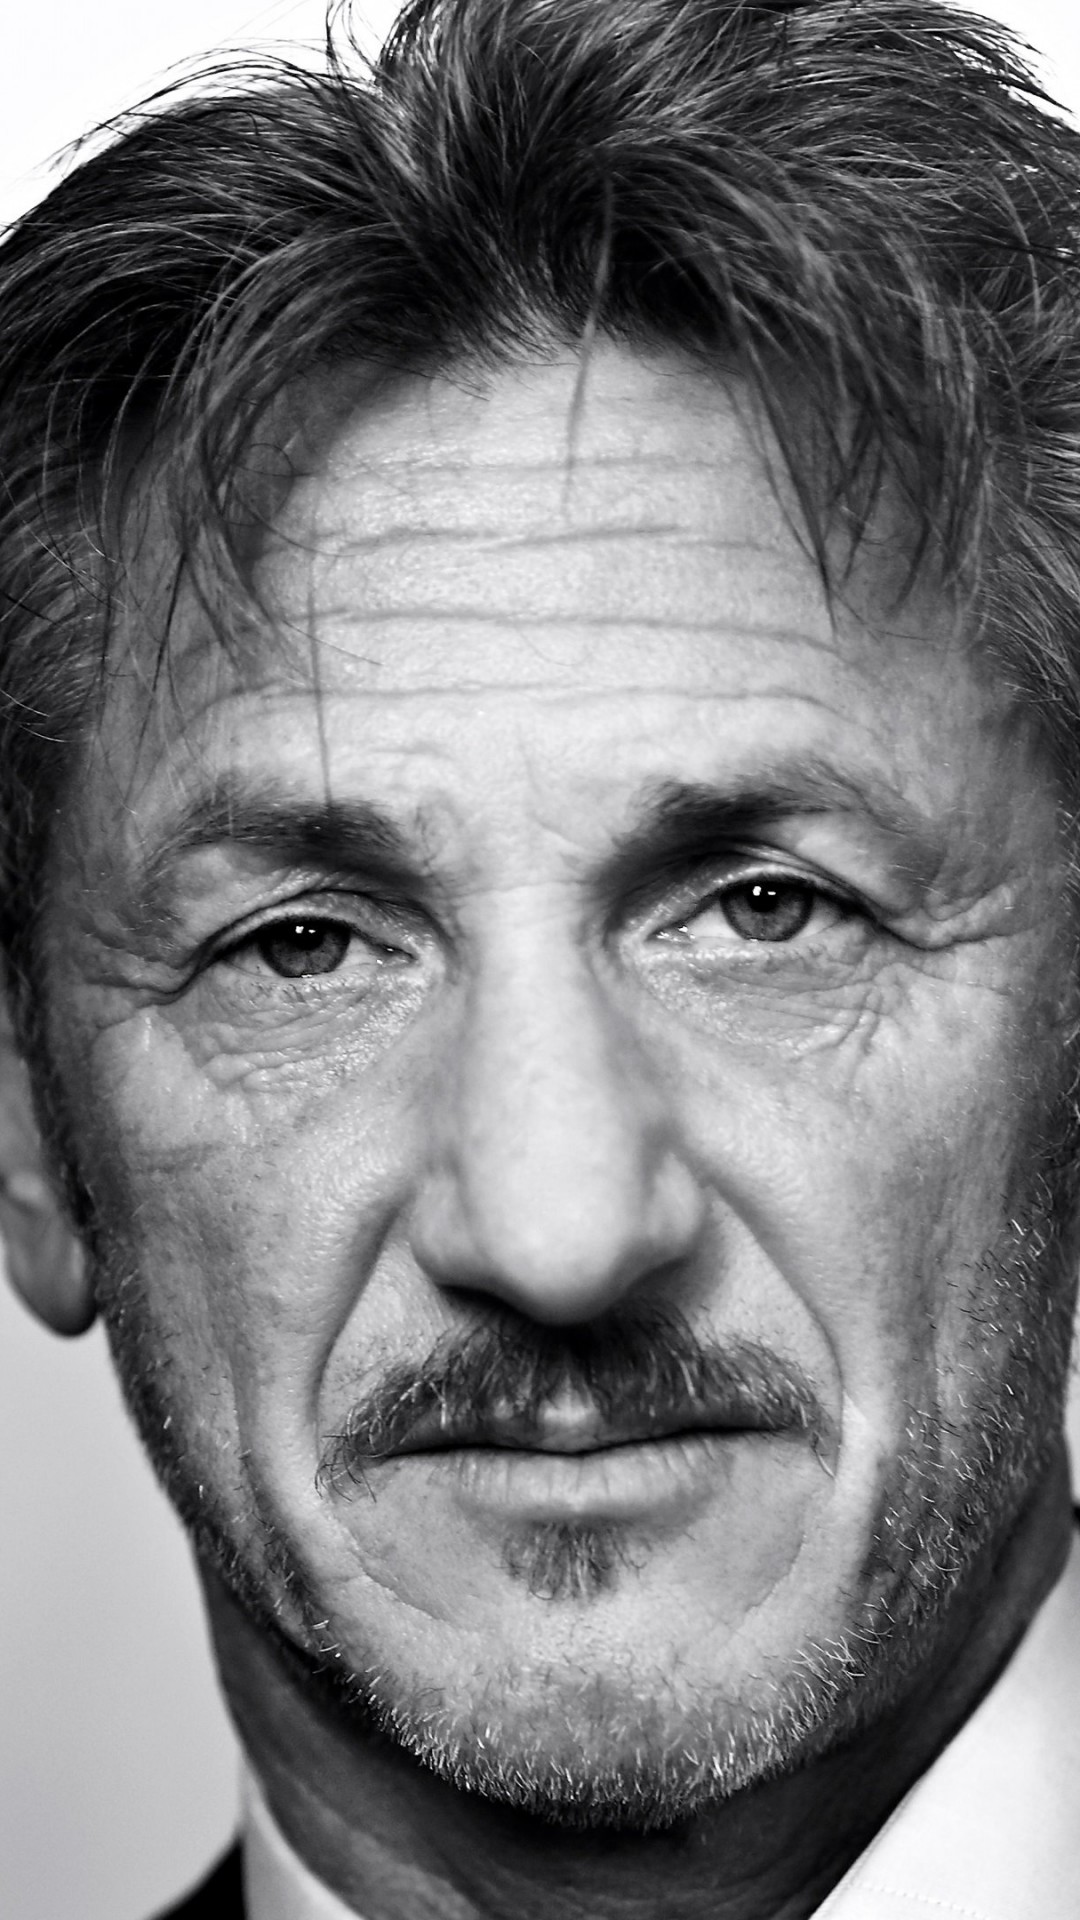 Sean Penn Portrait in Black & White Wallpaper for Google Nexus 5X